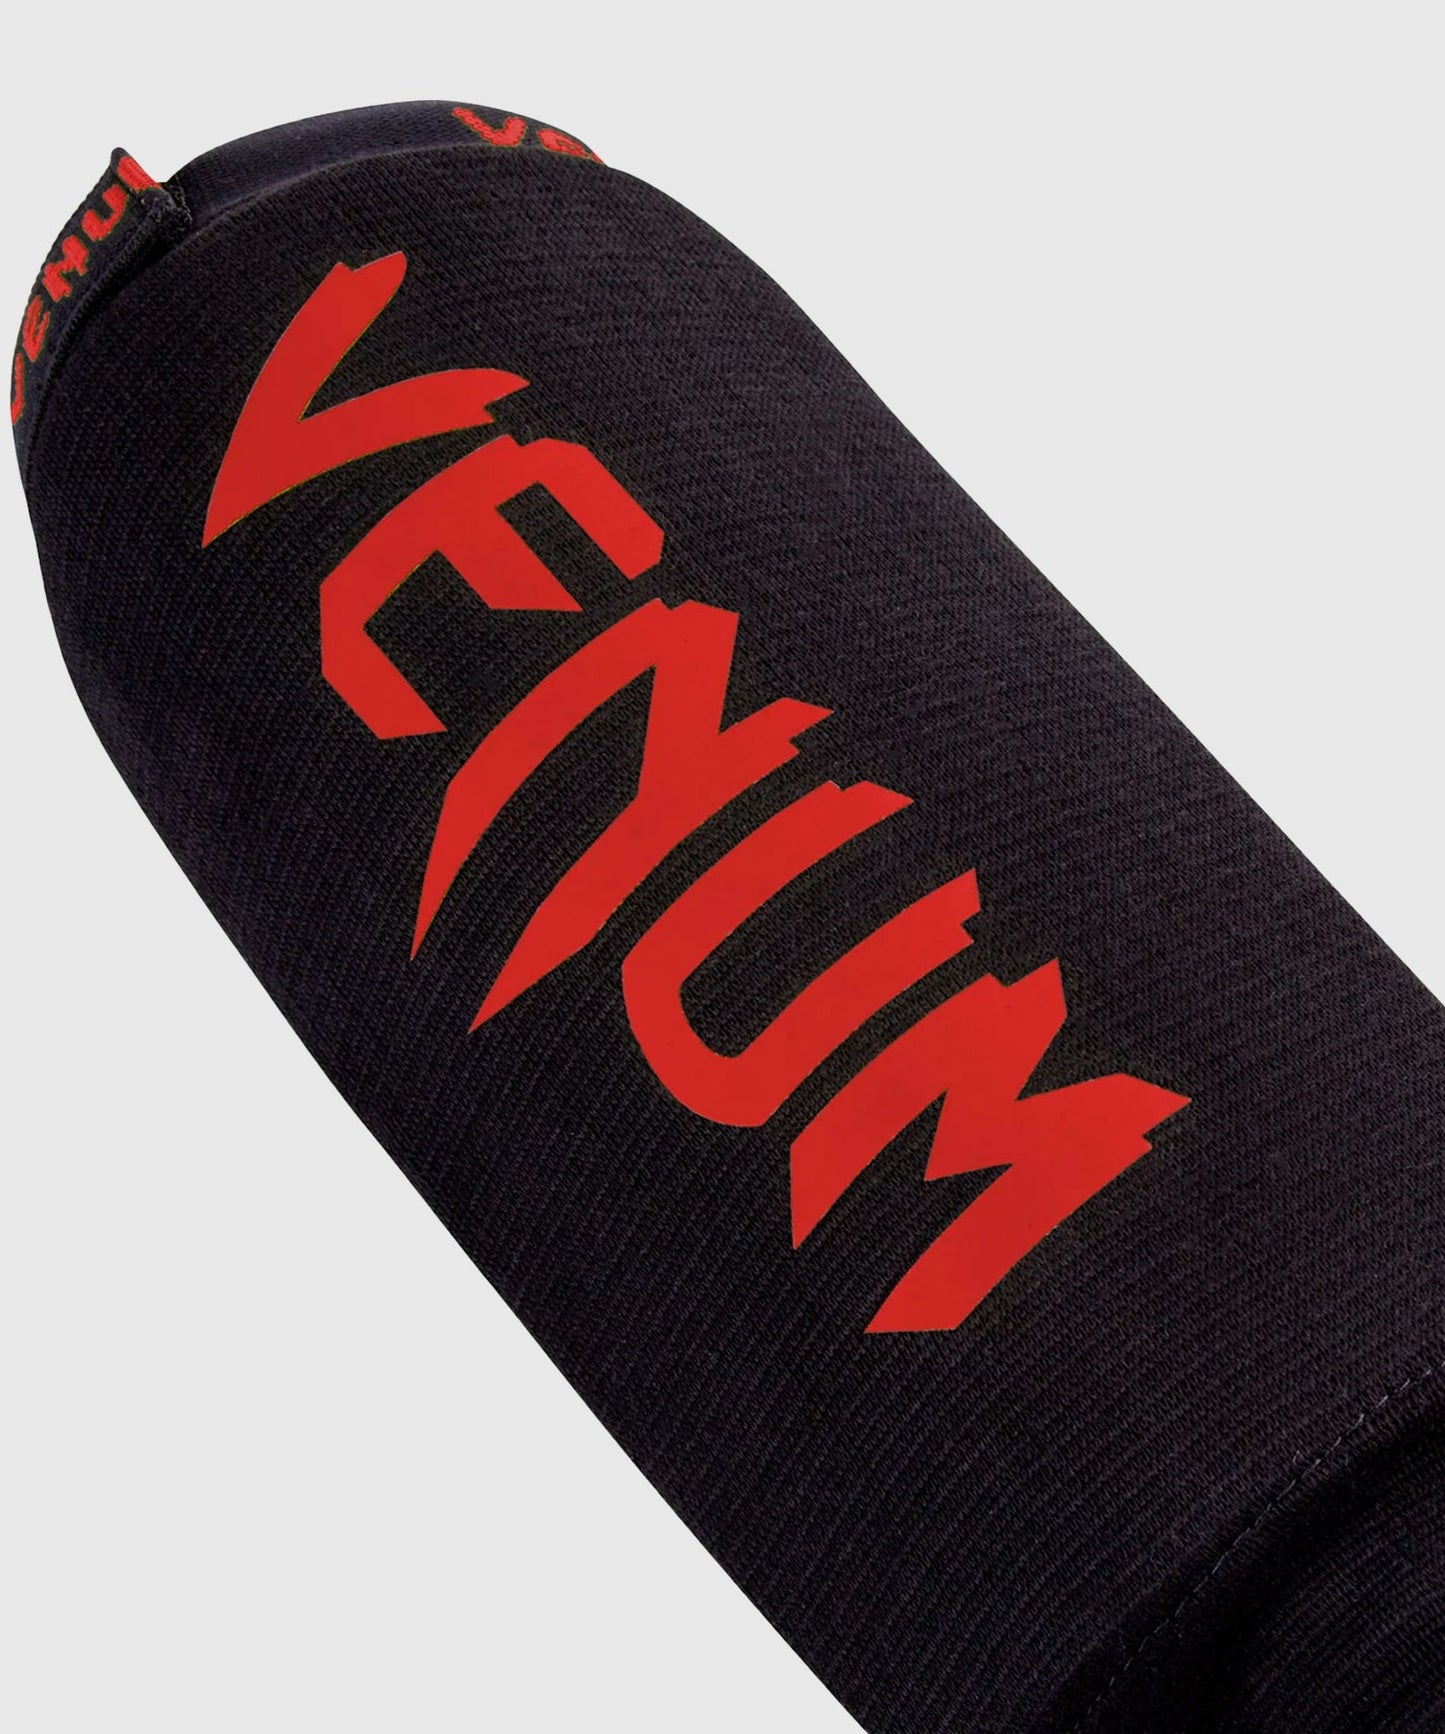 Venum Kontact Shin Guards - Black/Red